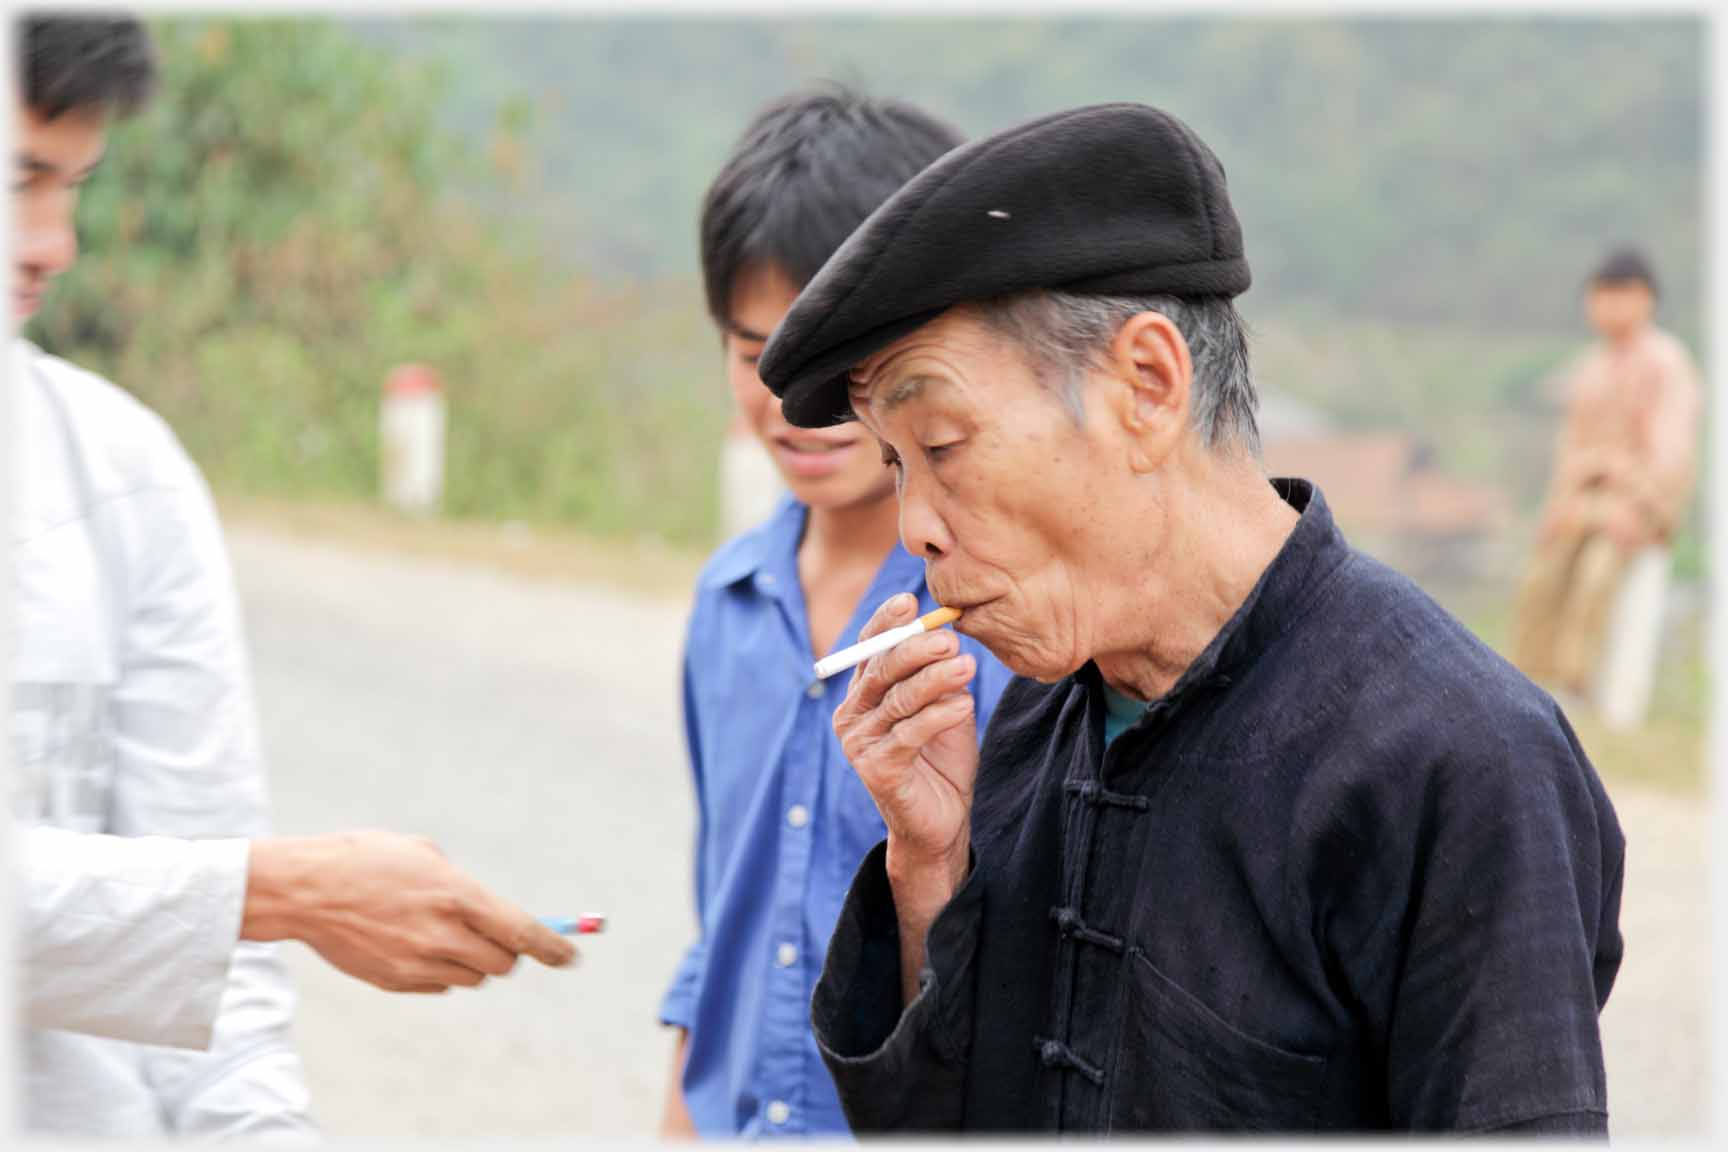 Older man with cigarette, lighter being proffered.